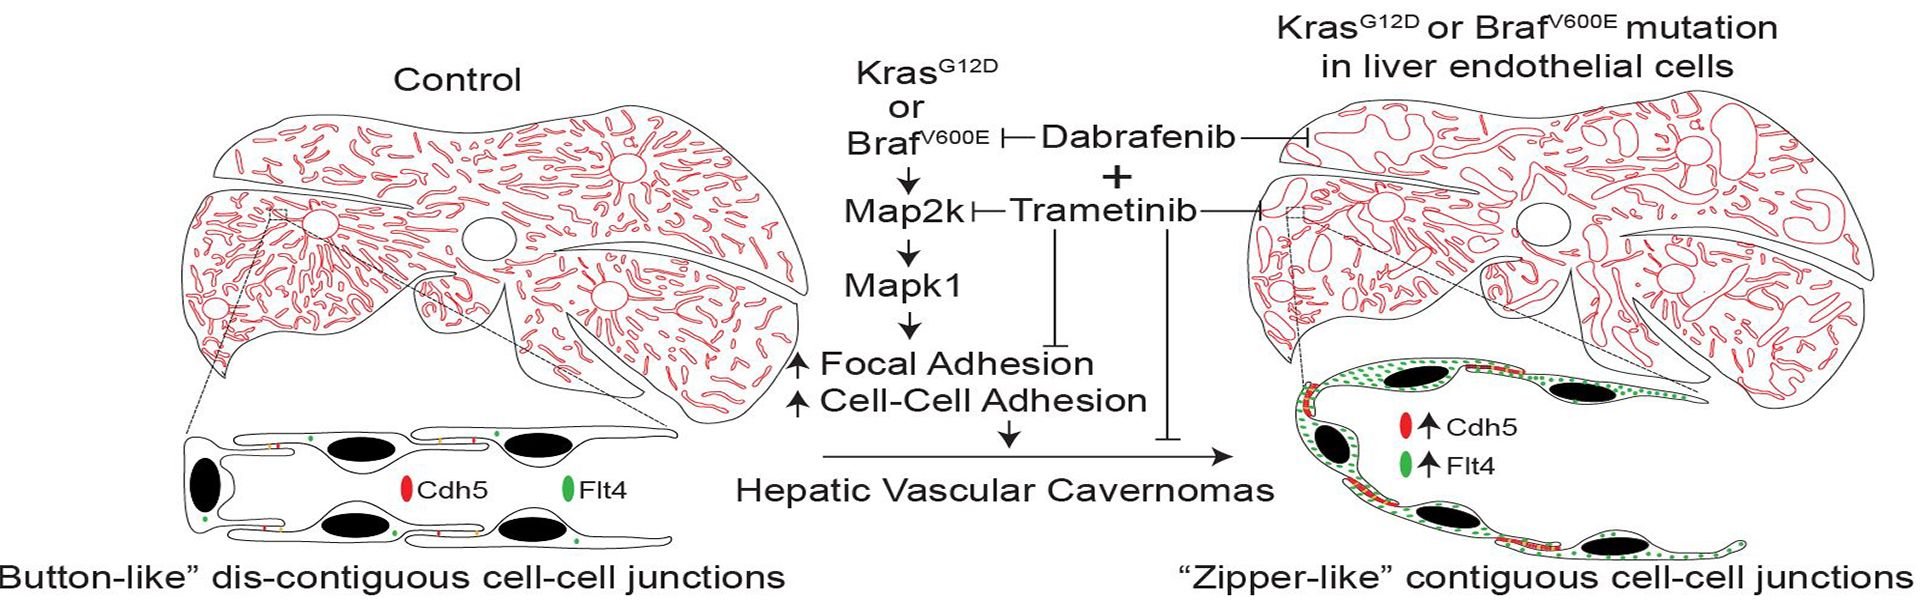 Hepatic Vascular Cavernomas